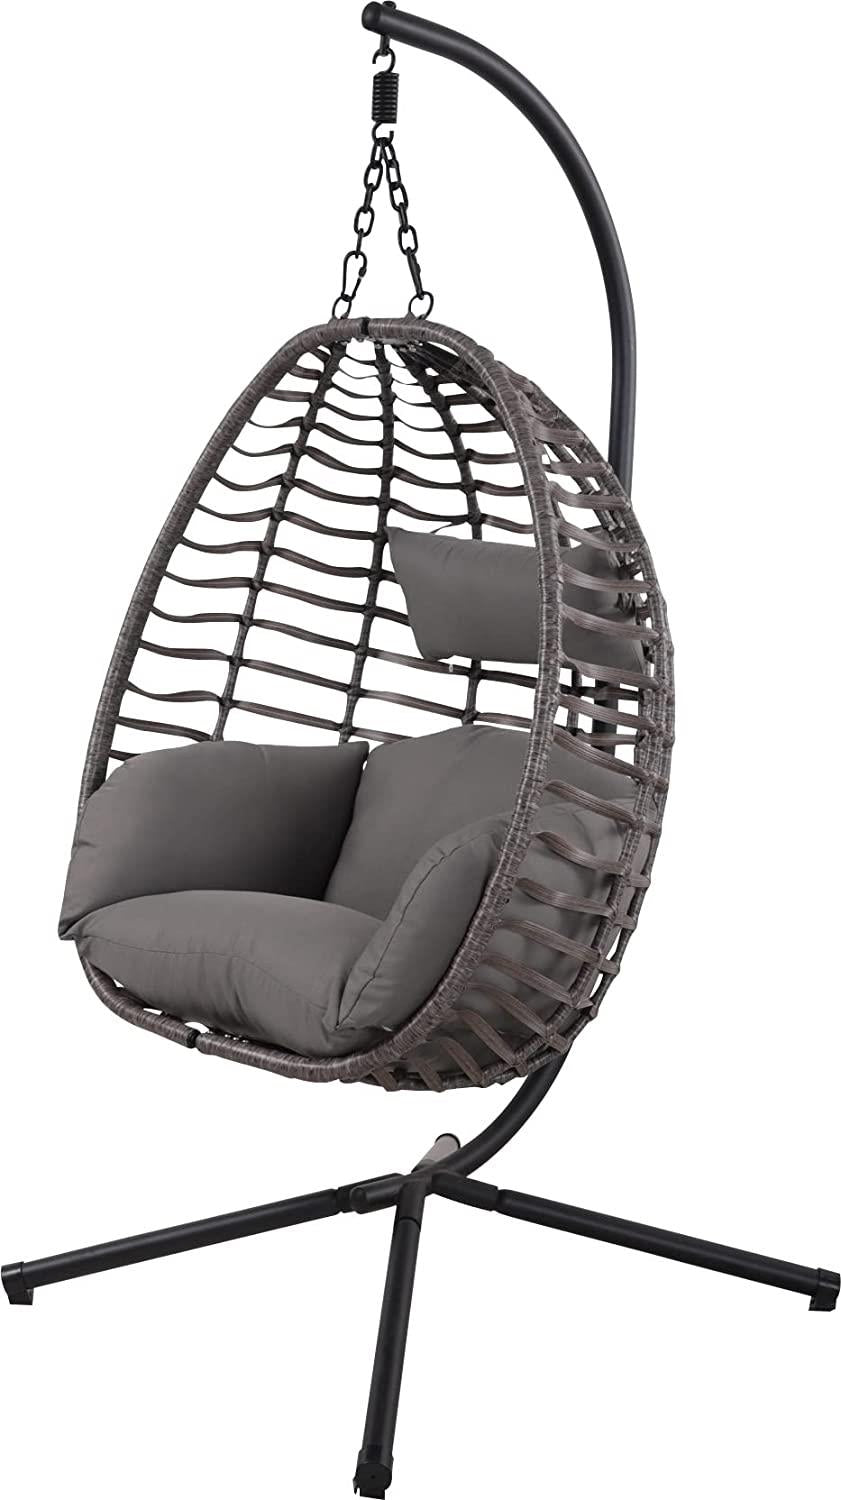 Hanging Garden Swing Egg Chair Patio Seat Grey Furniture